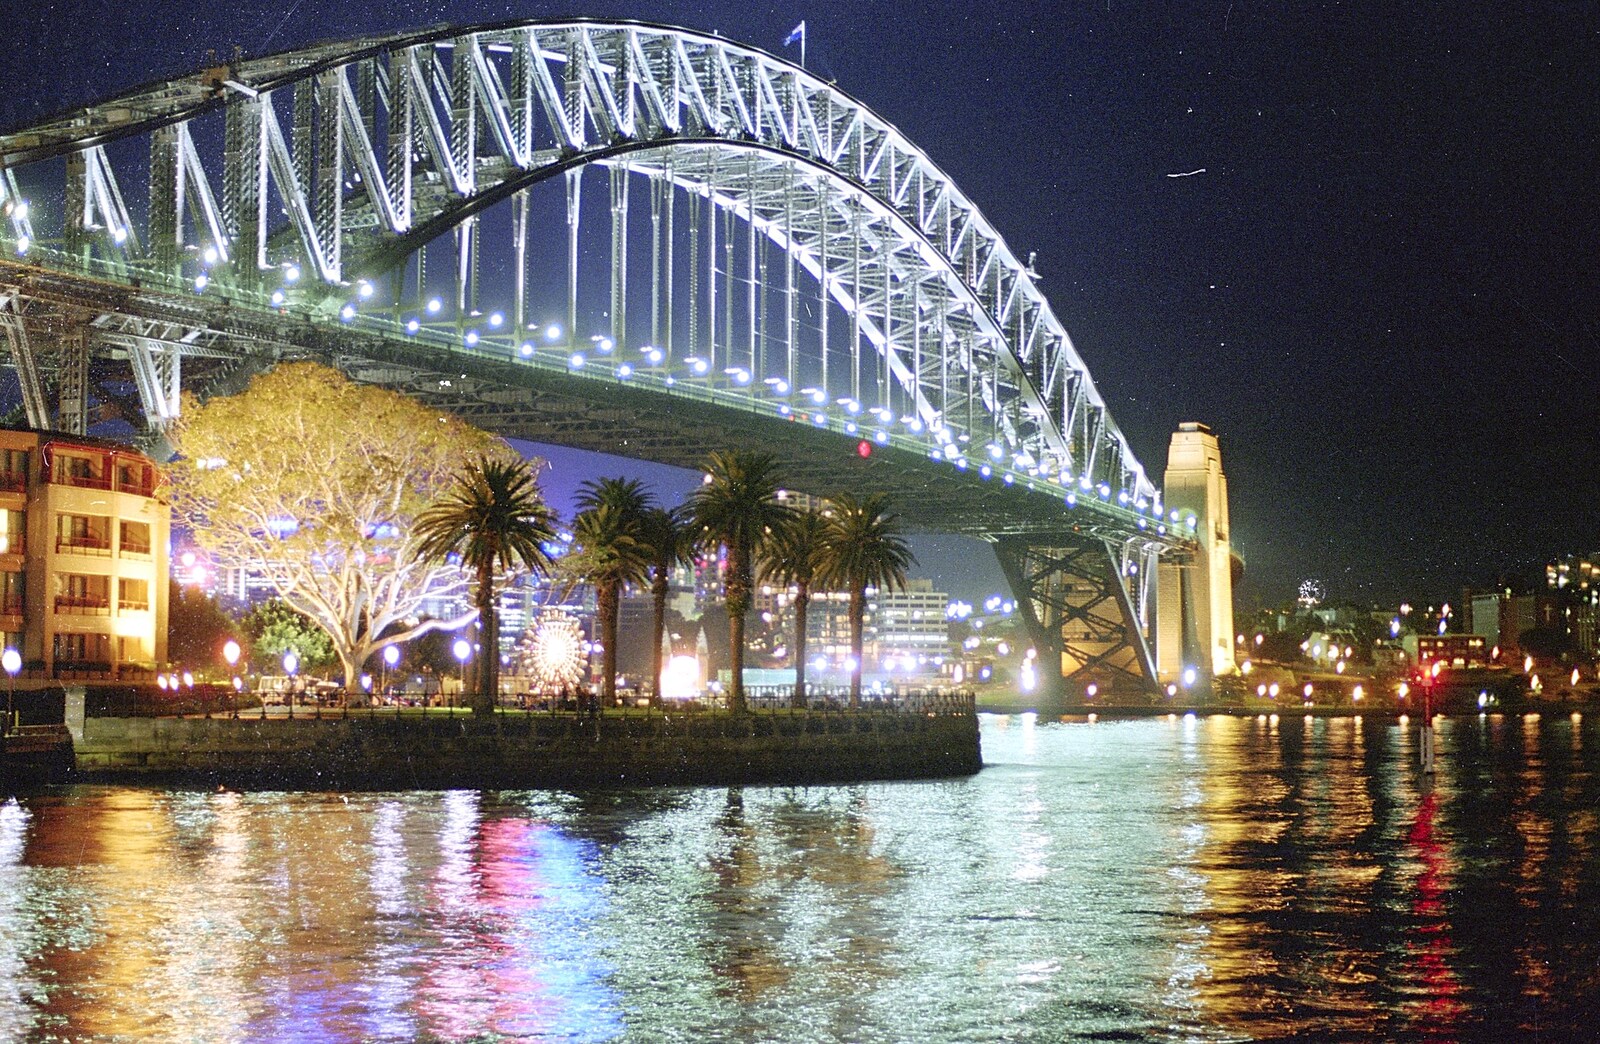 Sydney Harbour Bridge at night from Sydney Triathlon, Sydney, Australia - 16th April 2000